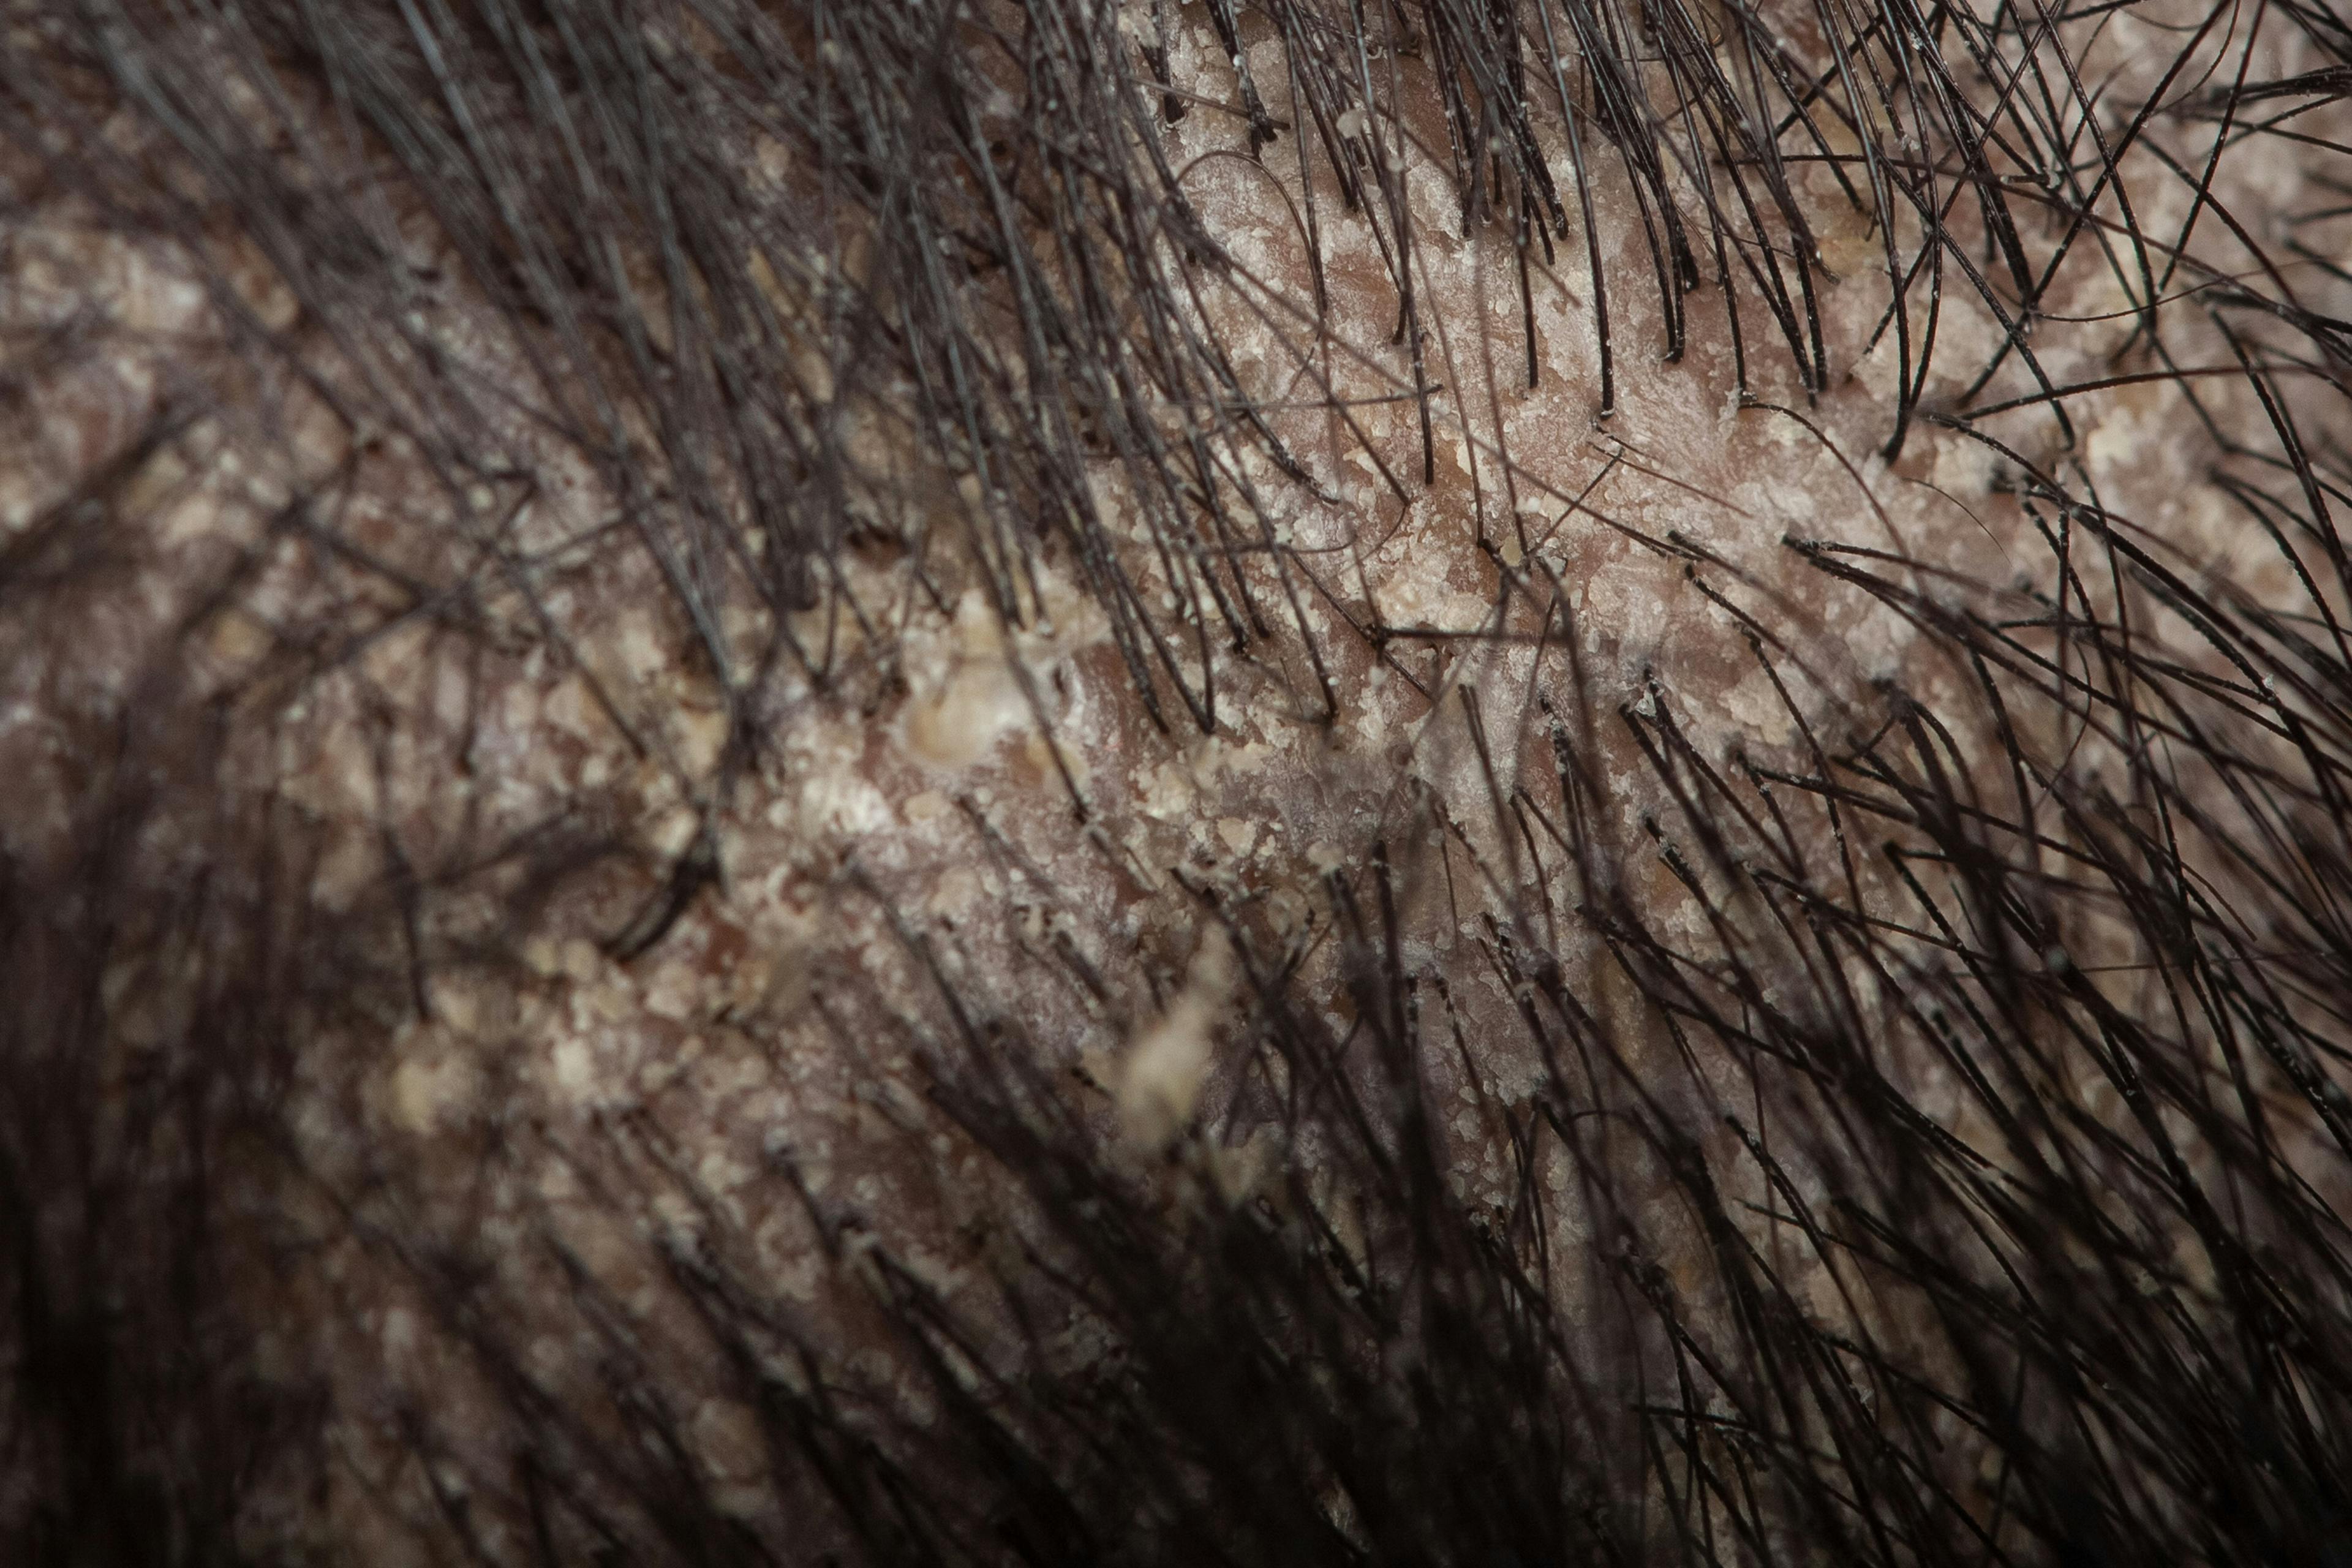 macro view of hair root or scalp with dandruff, seborrheic dermatitis | Image Credit: © Dharma - stock.adobe.com